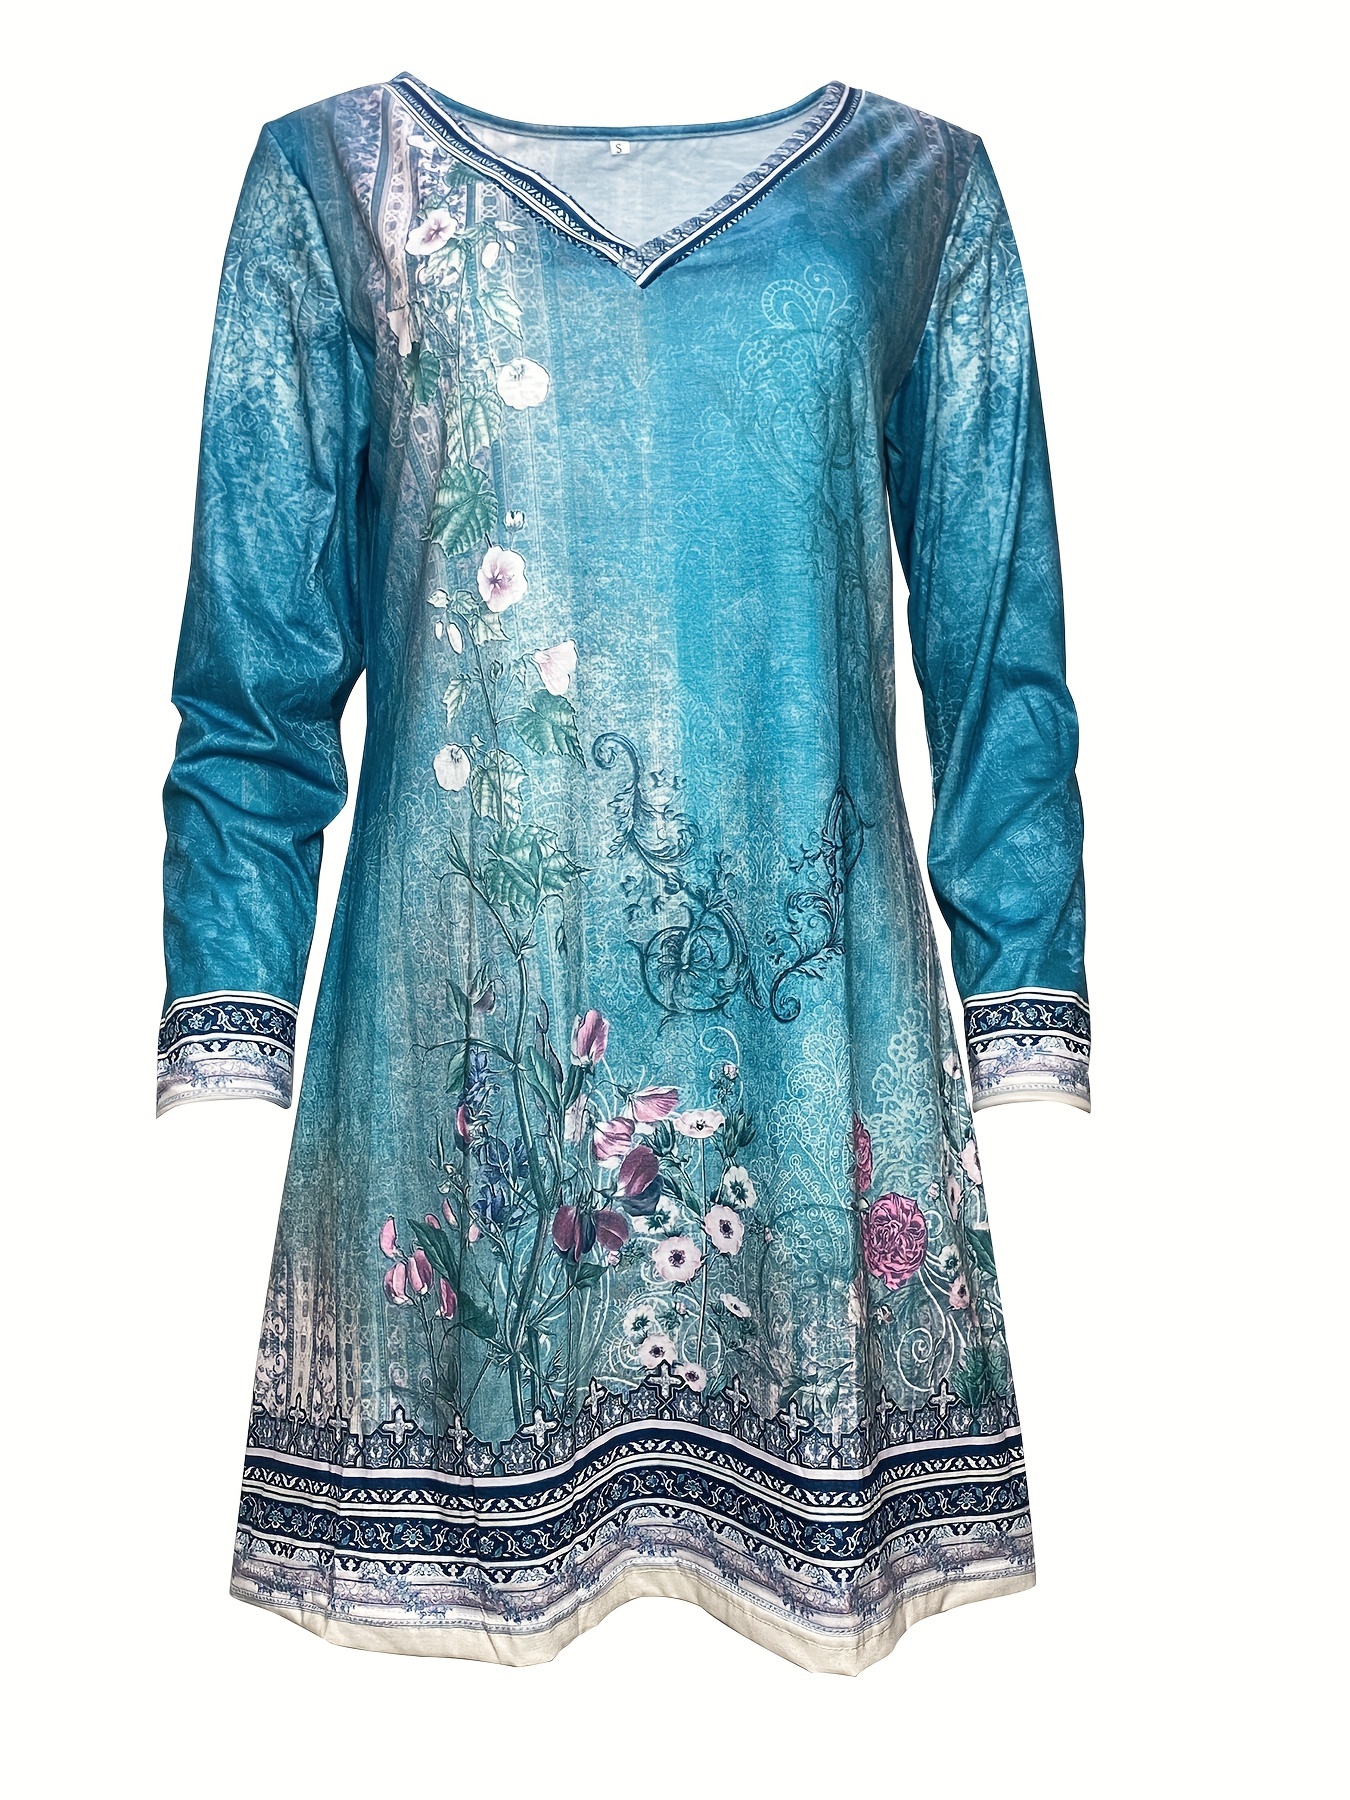 vintage floral print dress casual v neck long sleeve dress for spring womens clothing